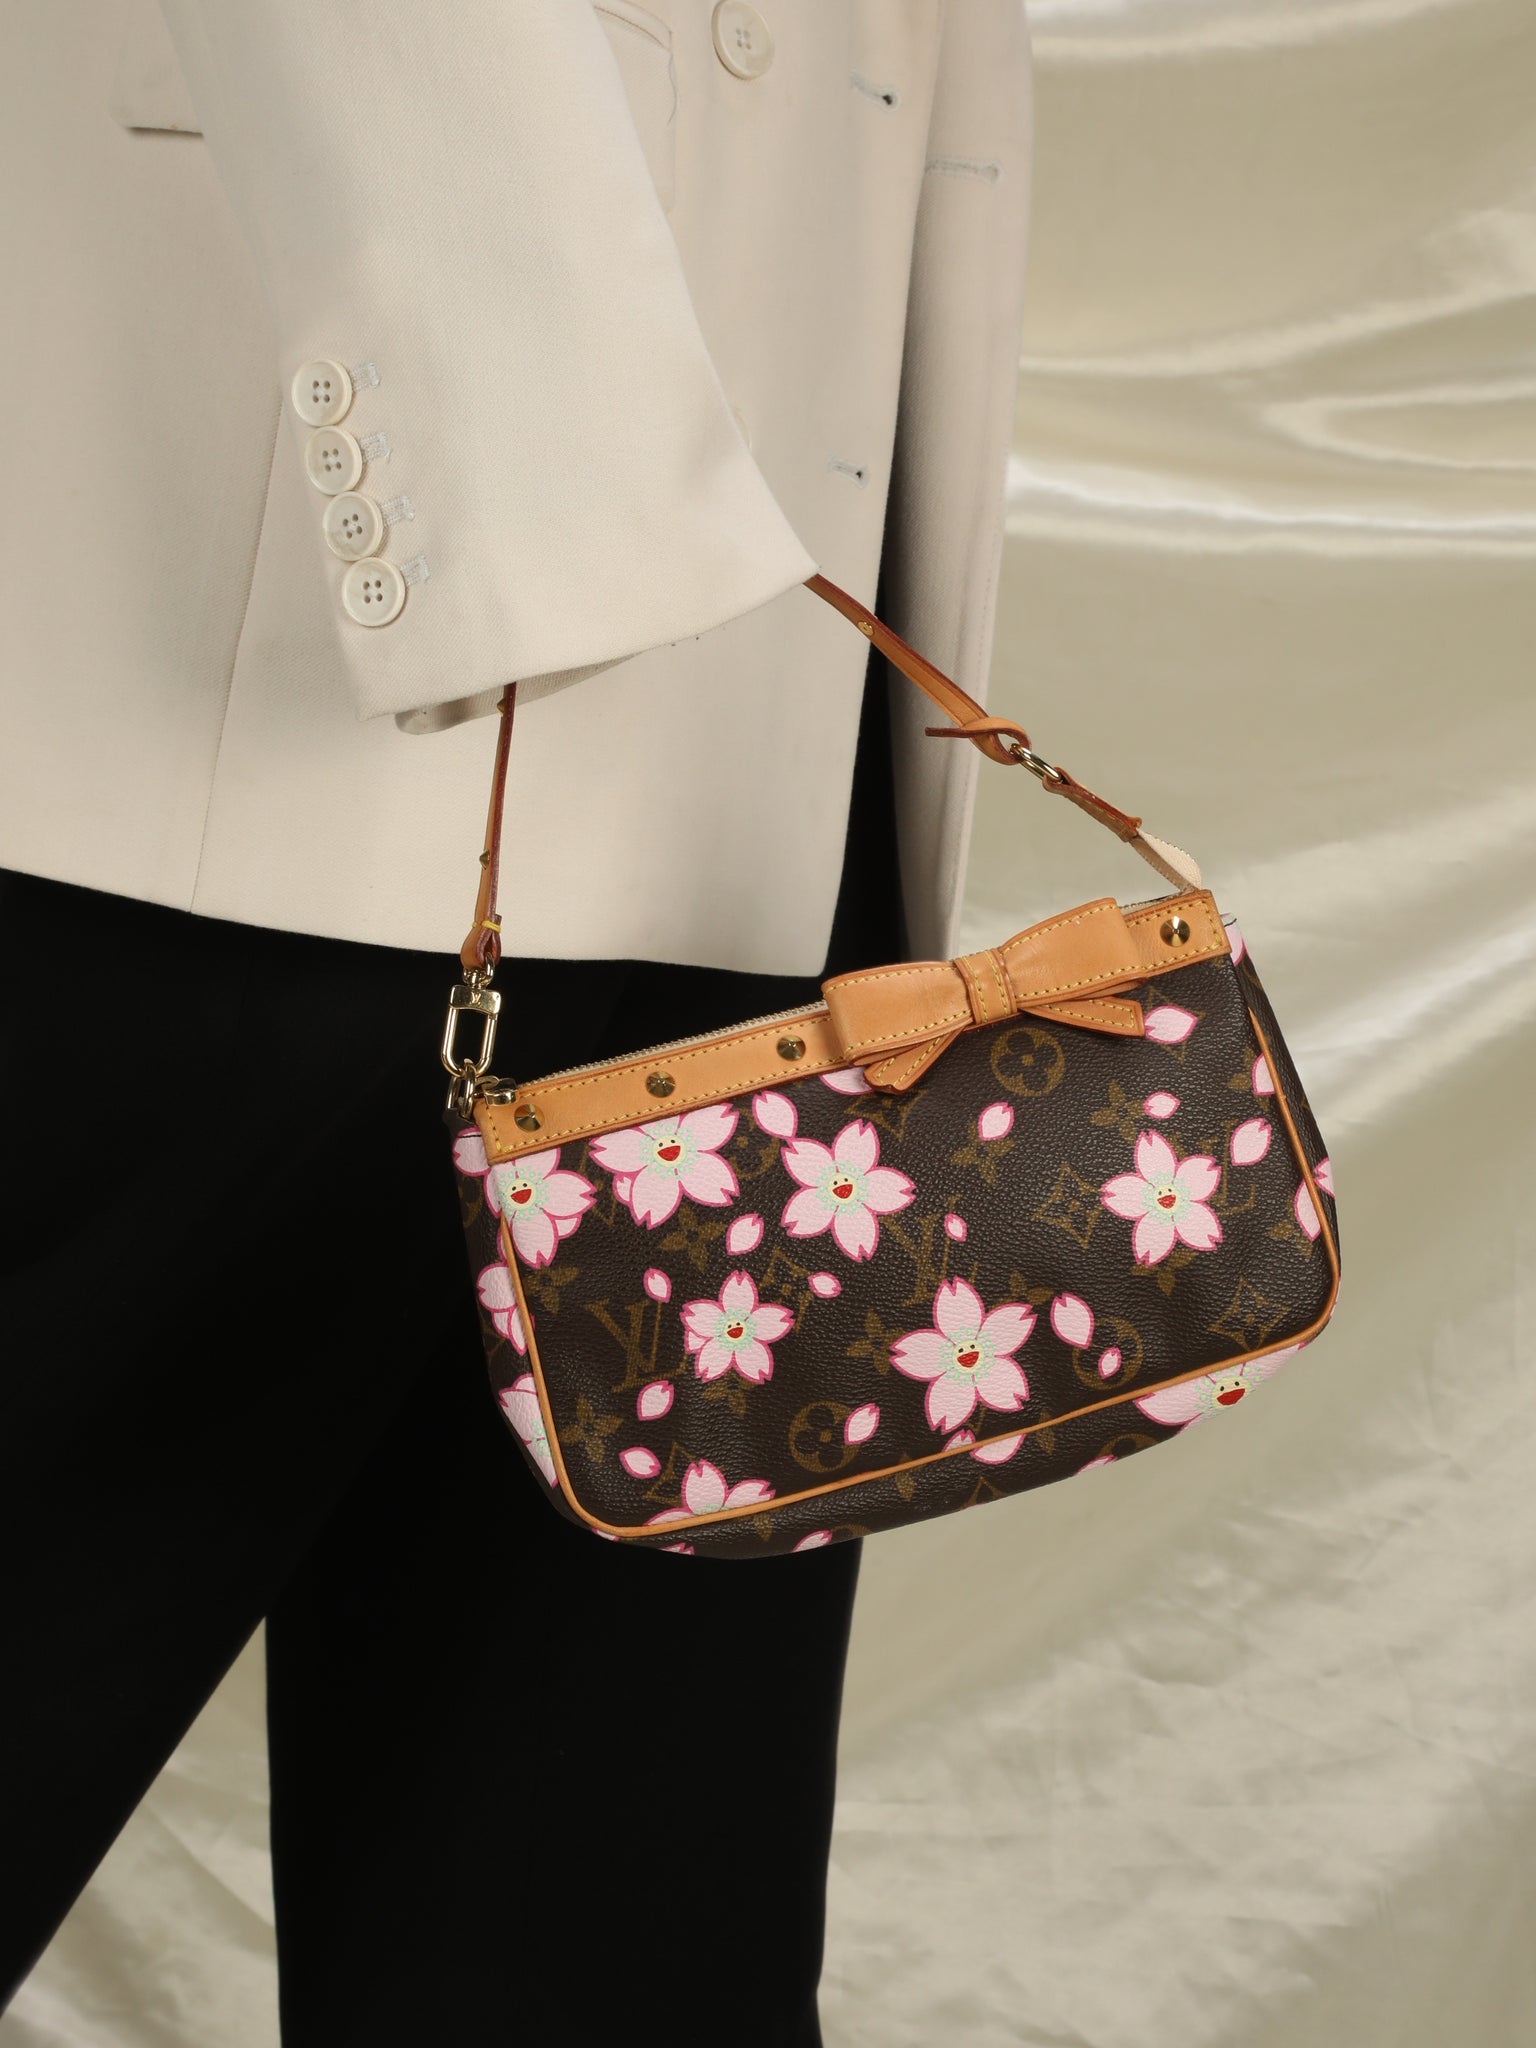 Limited Edition Louis Vuitton Takashi Murakami Cherry Blossom